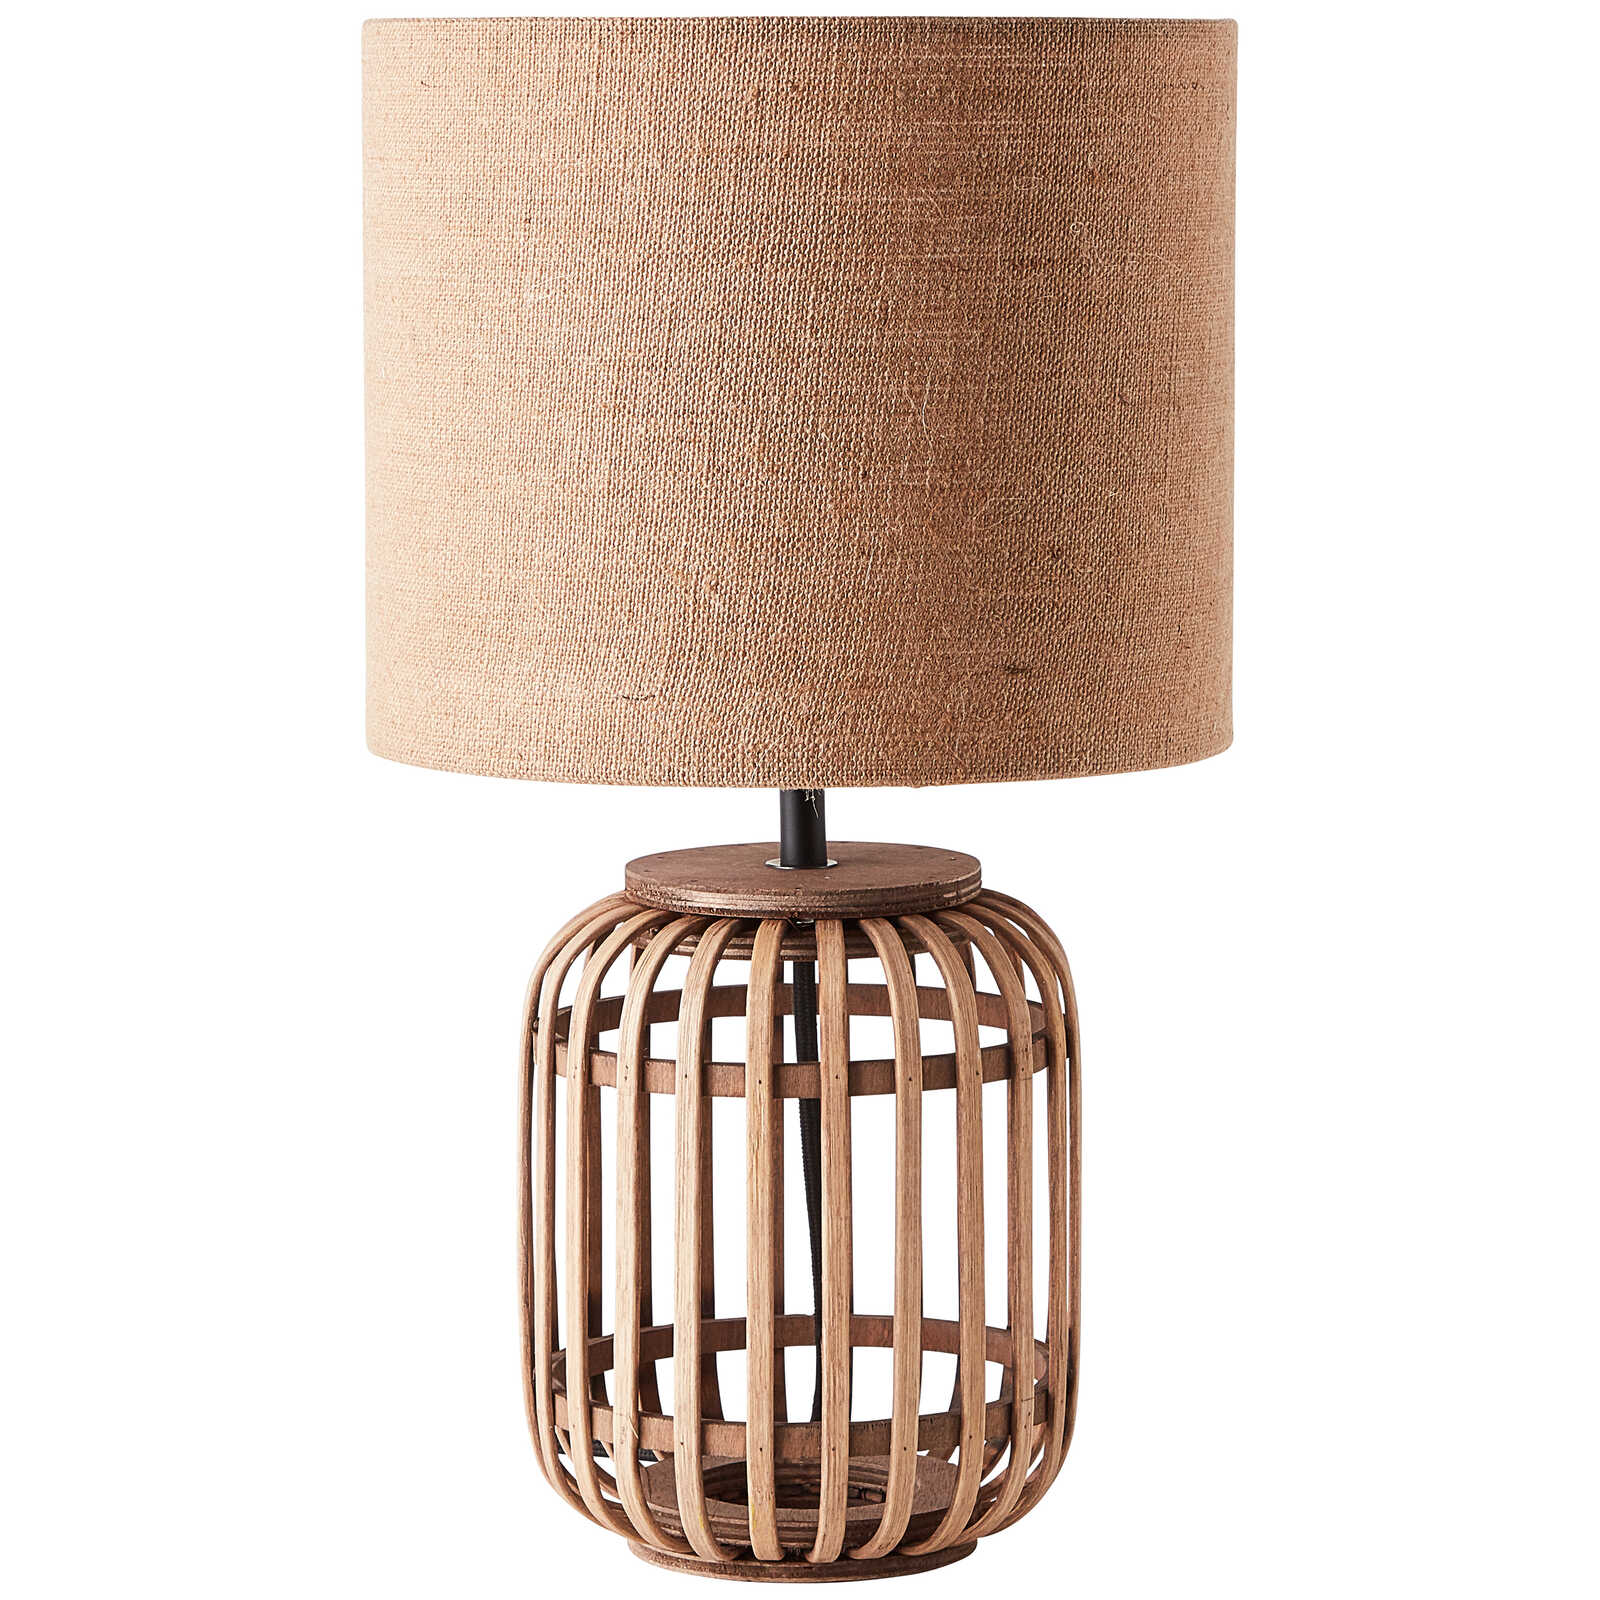             Bamboo table lamp - Willi 1 - Brown
        